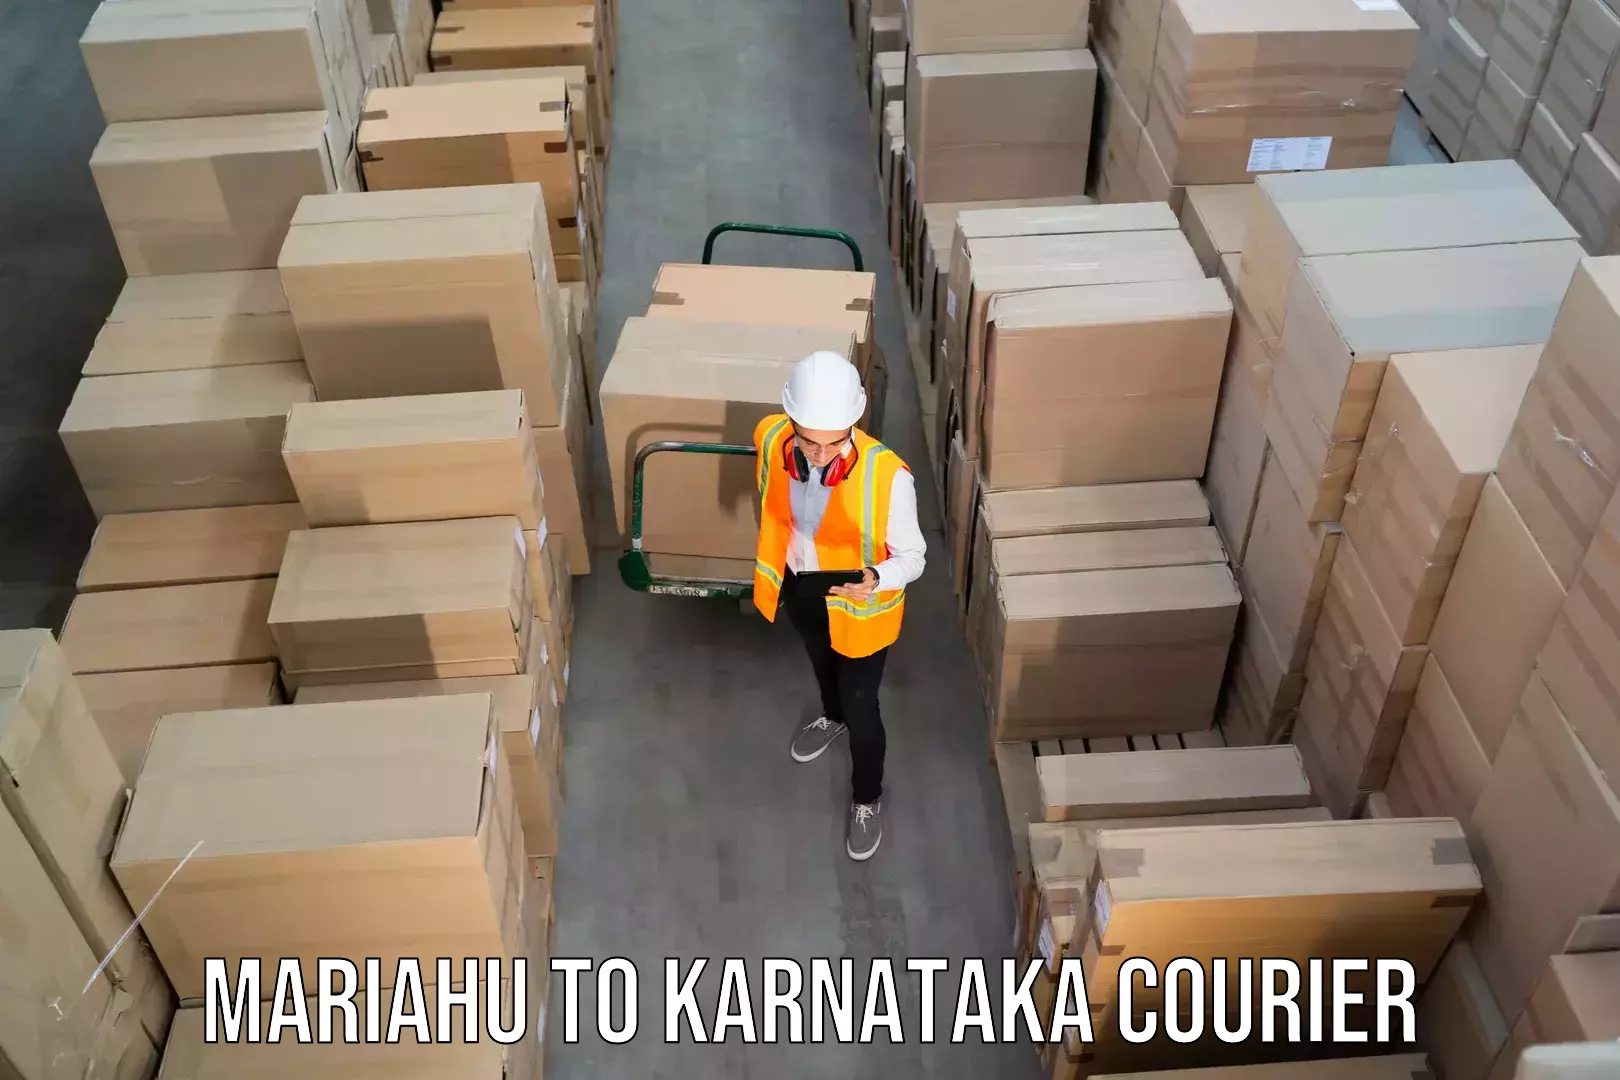 User-friendly delivery service Mariahu to Karnataka